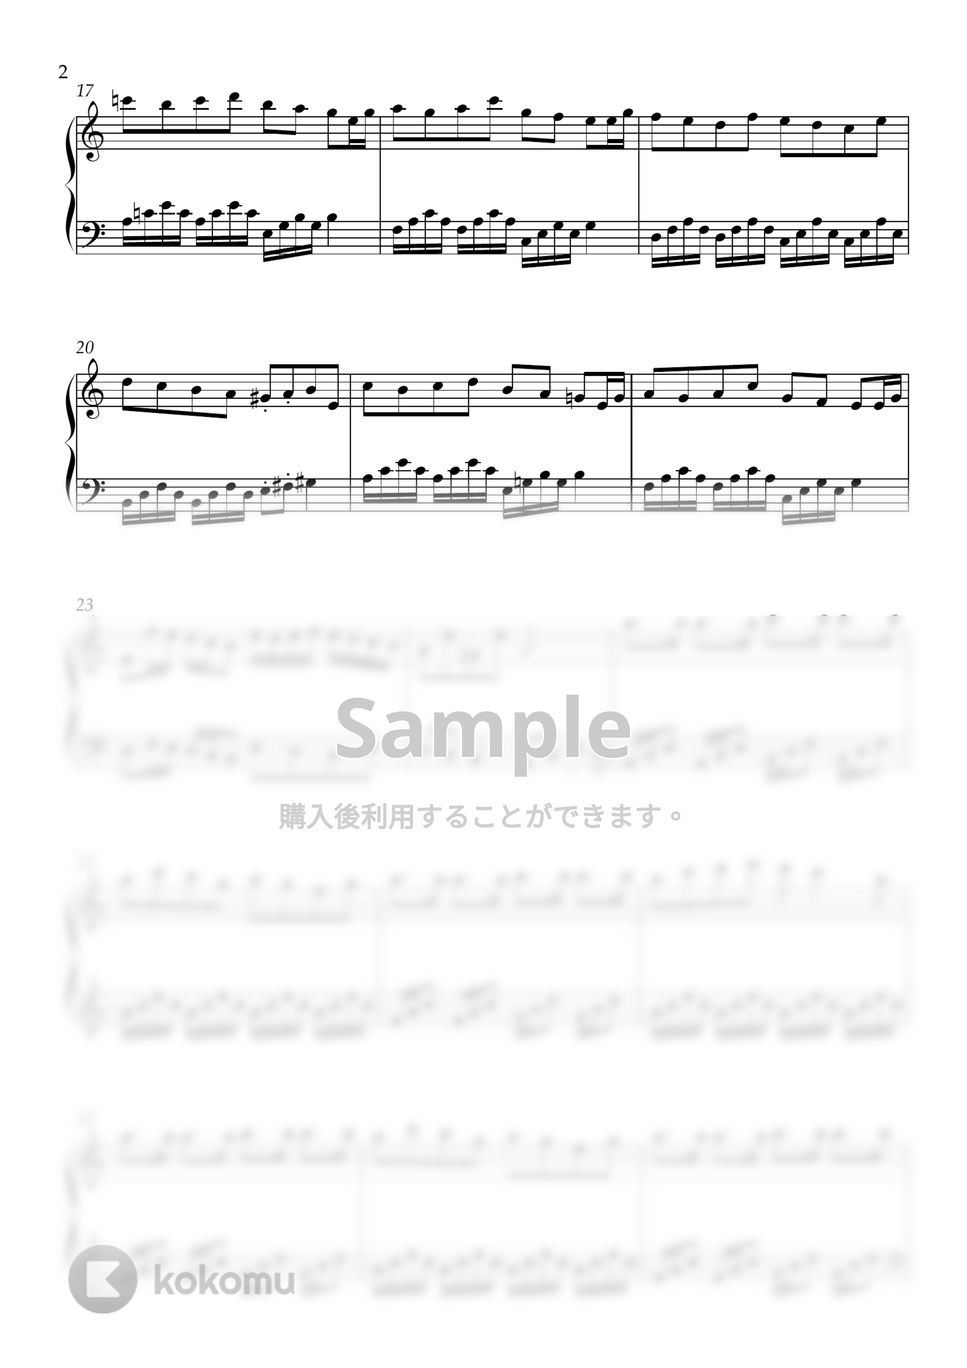 DJ Okawari - Flower Dance (ピアノソロ初級) by Ajima Piano